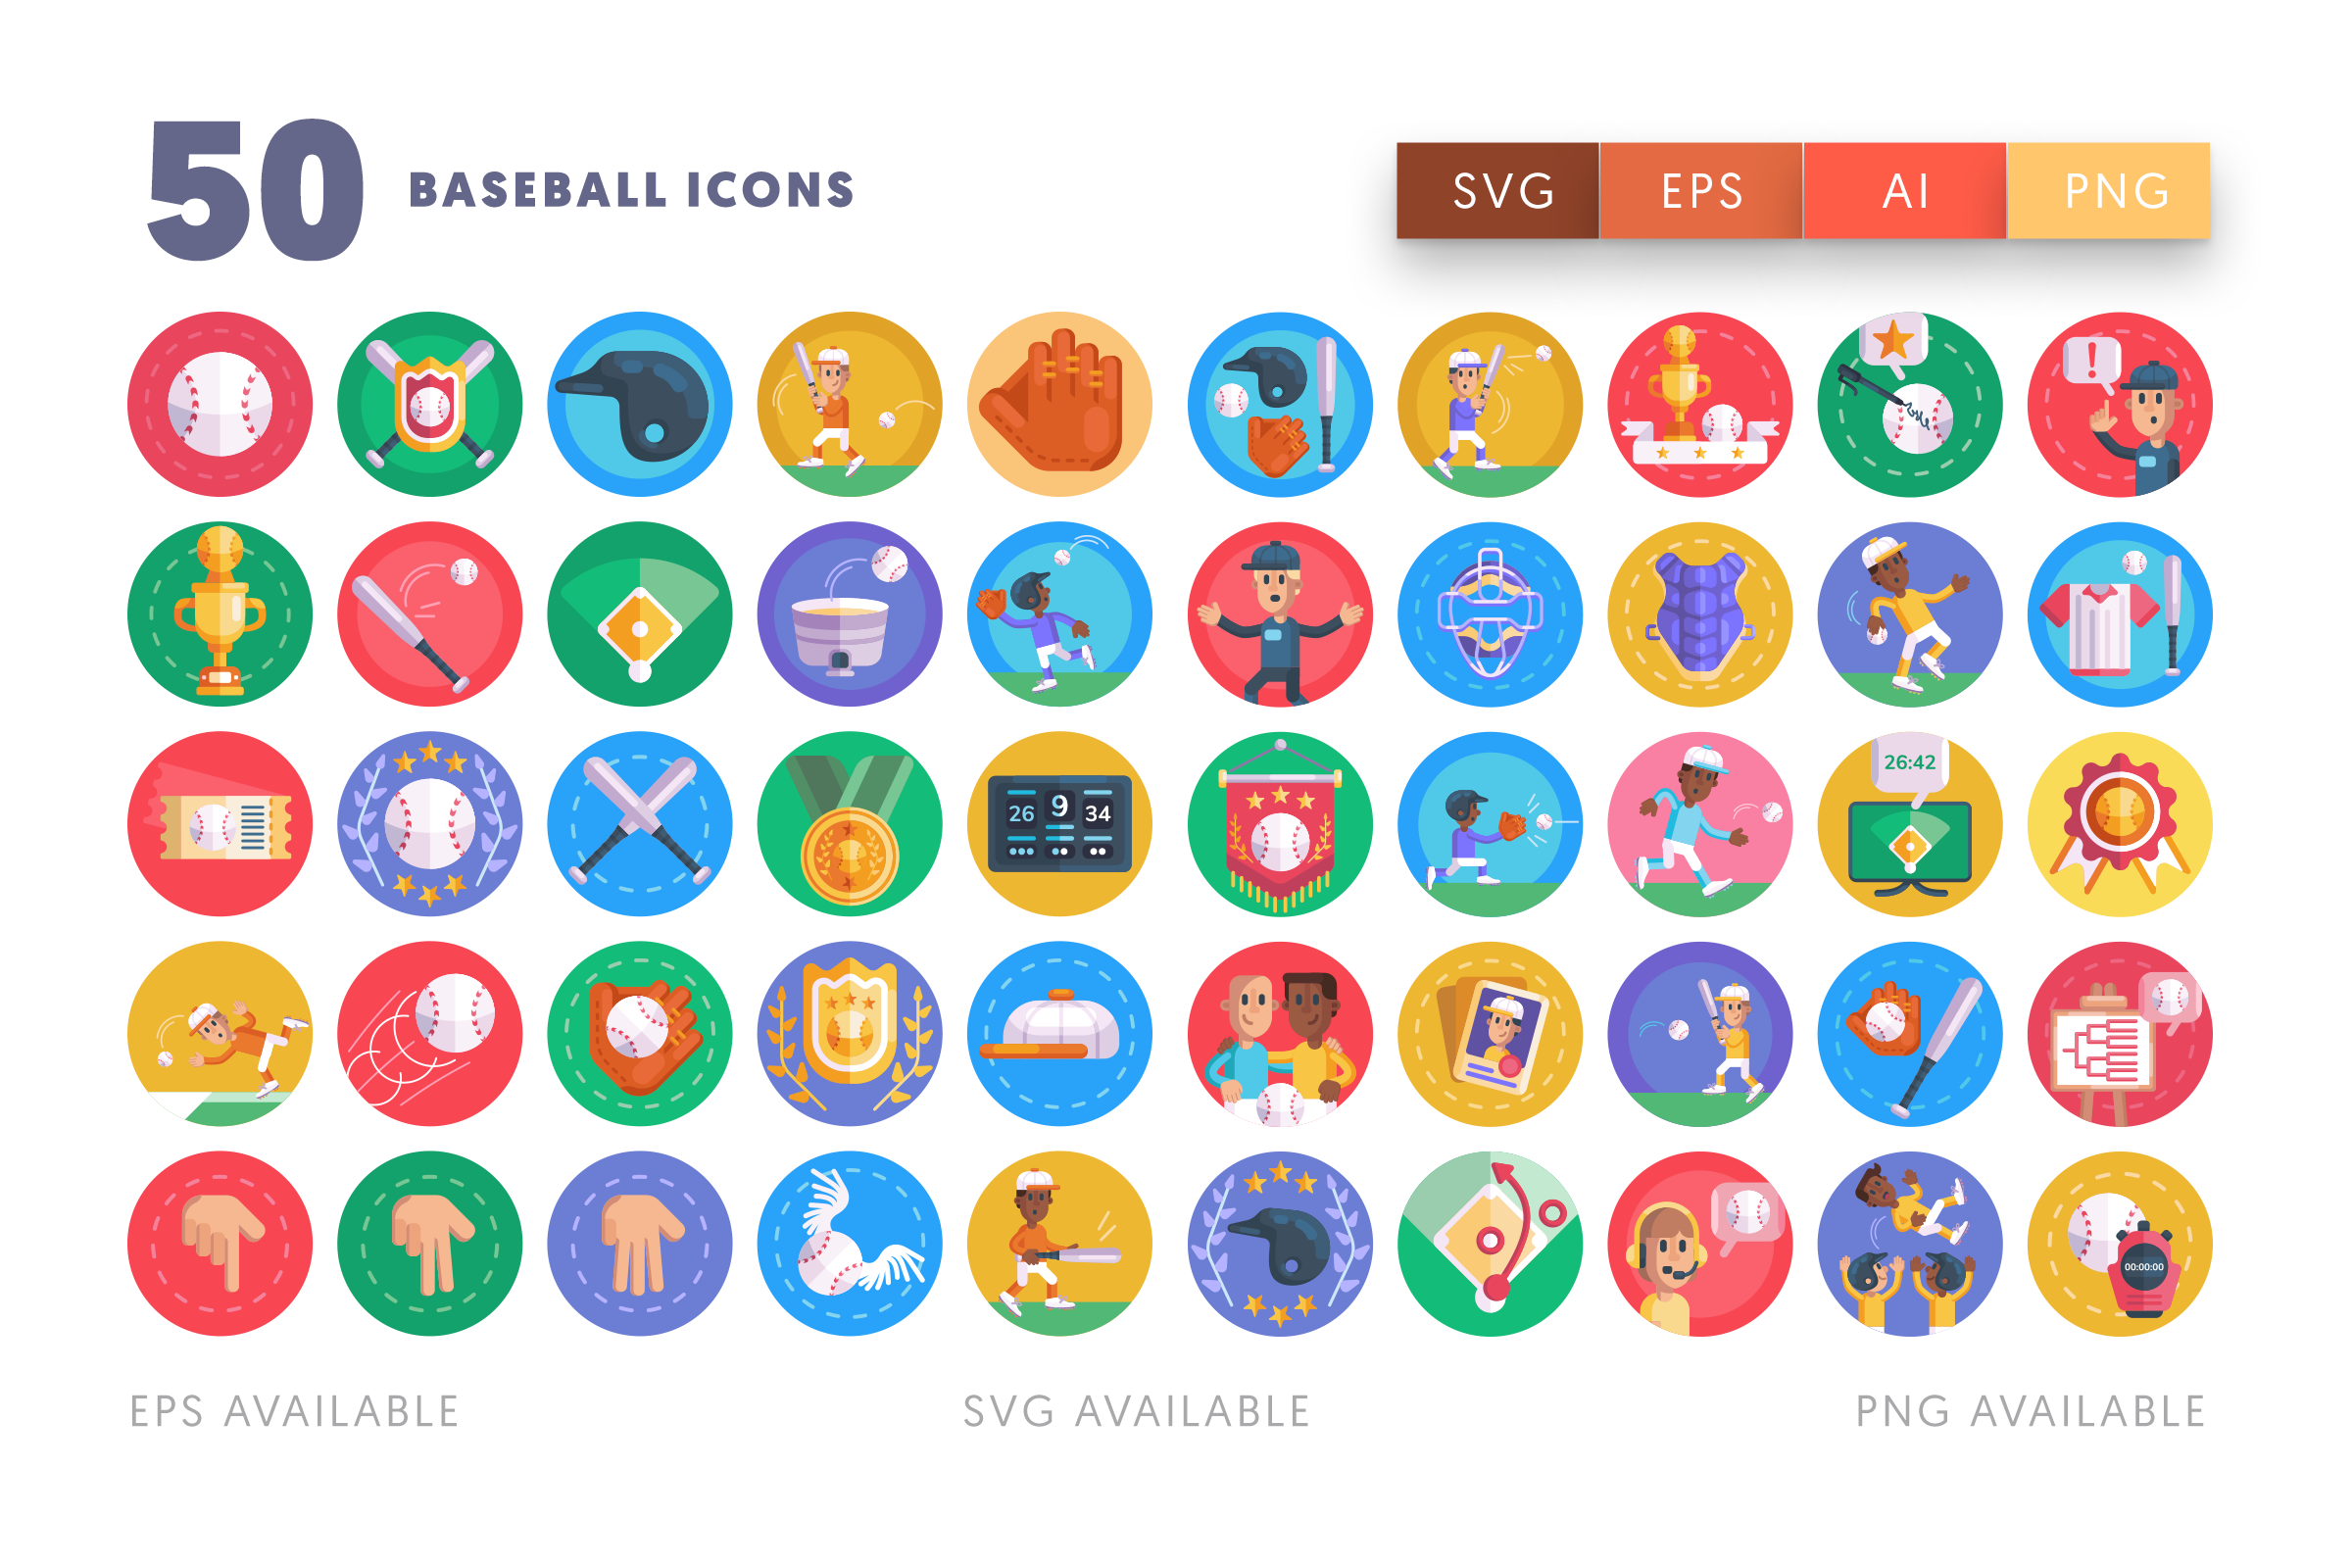 Baseball icons png/svg/eps